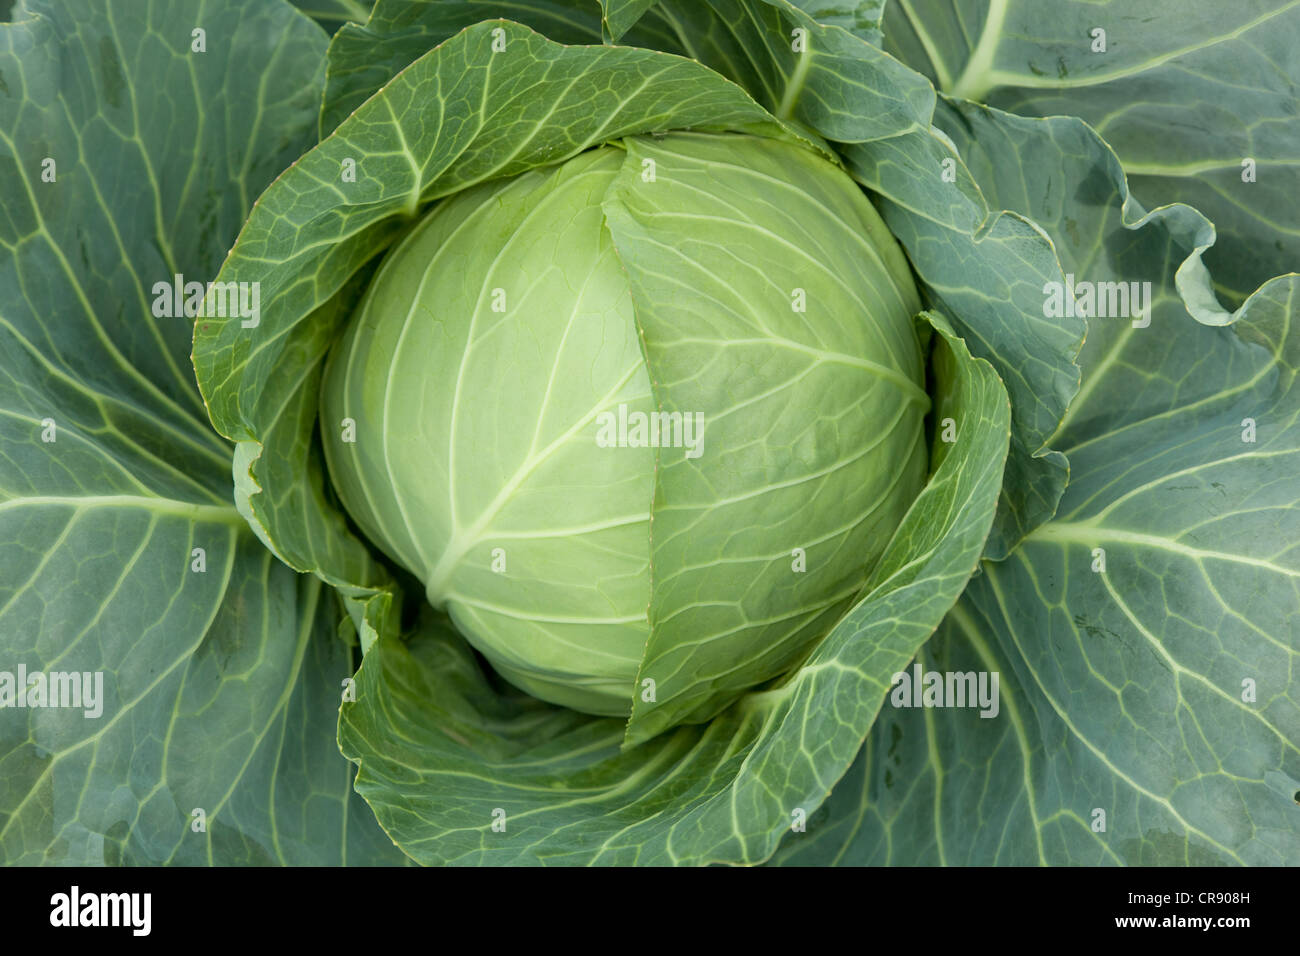 big white head cabbage grow on field Stock Photo